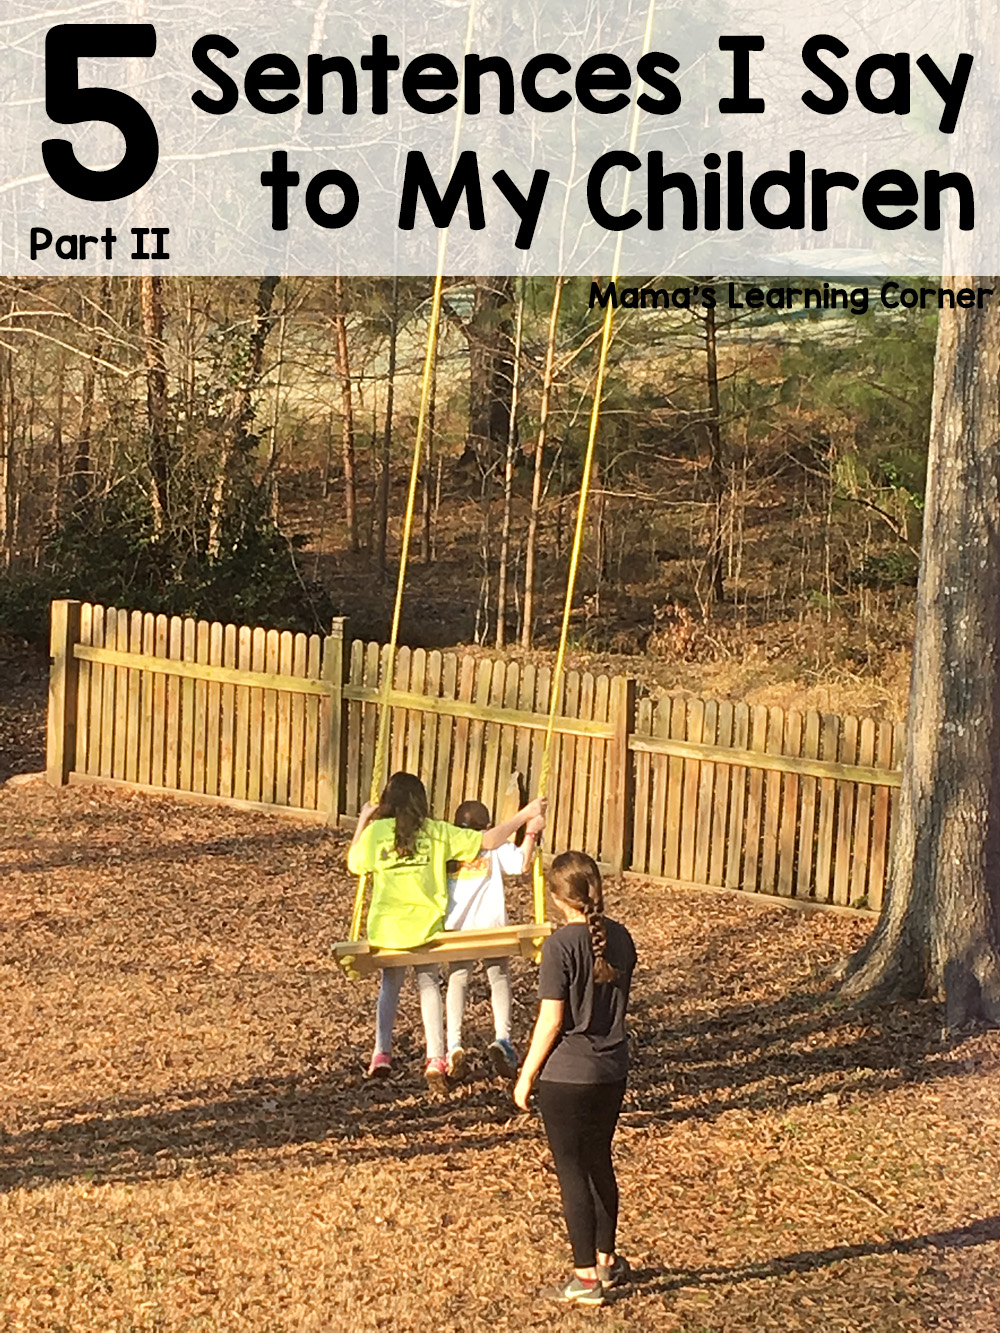 5 Sentences I Say to My Children Part II